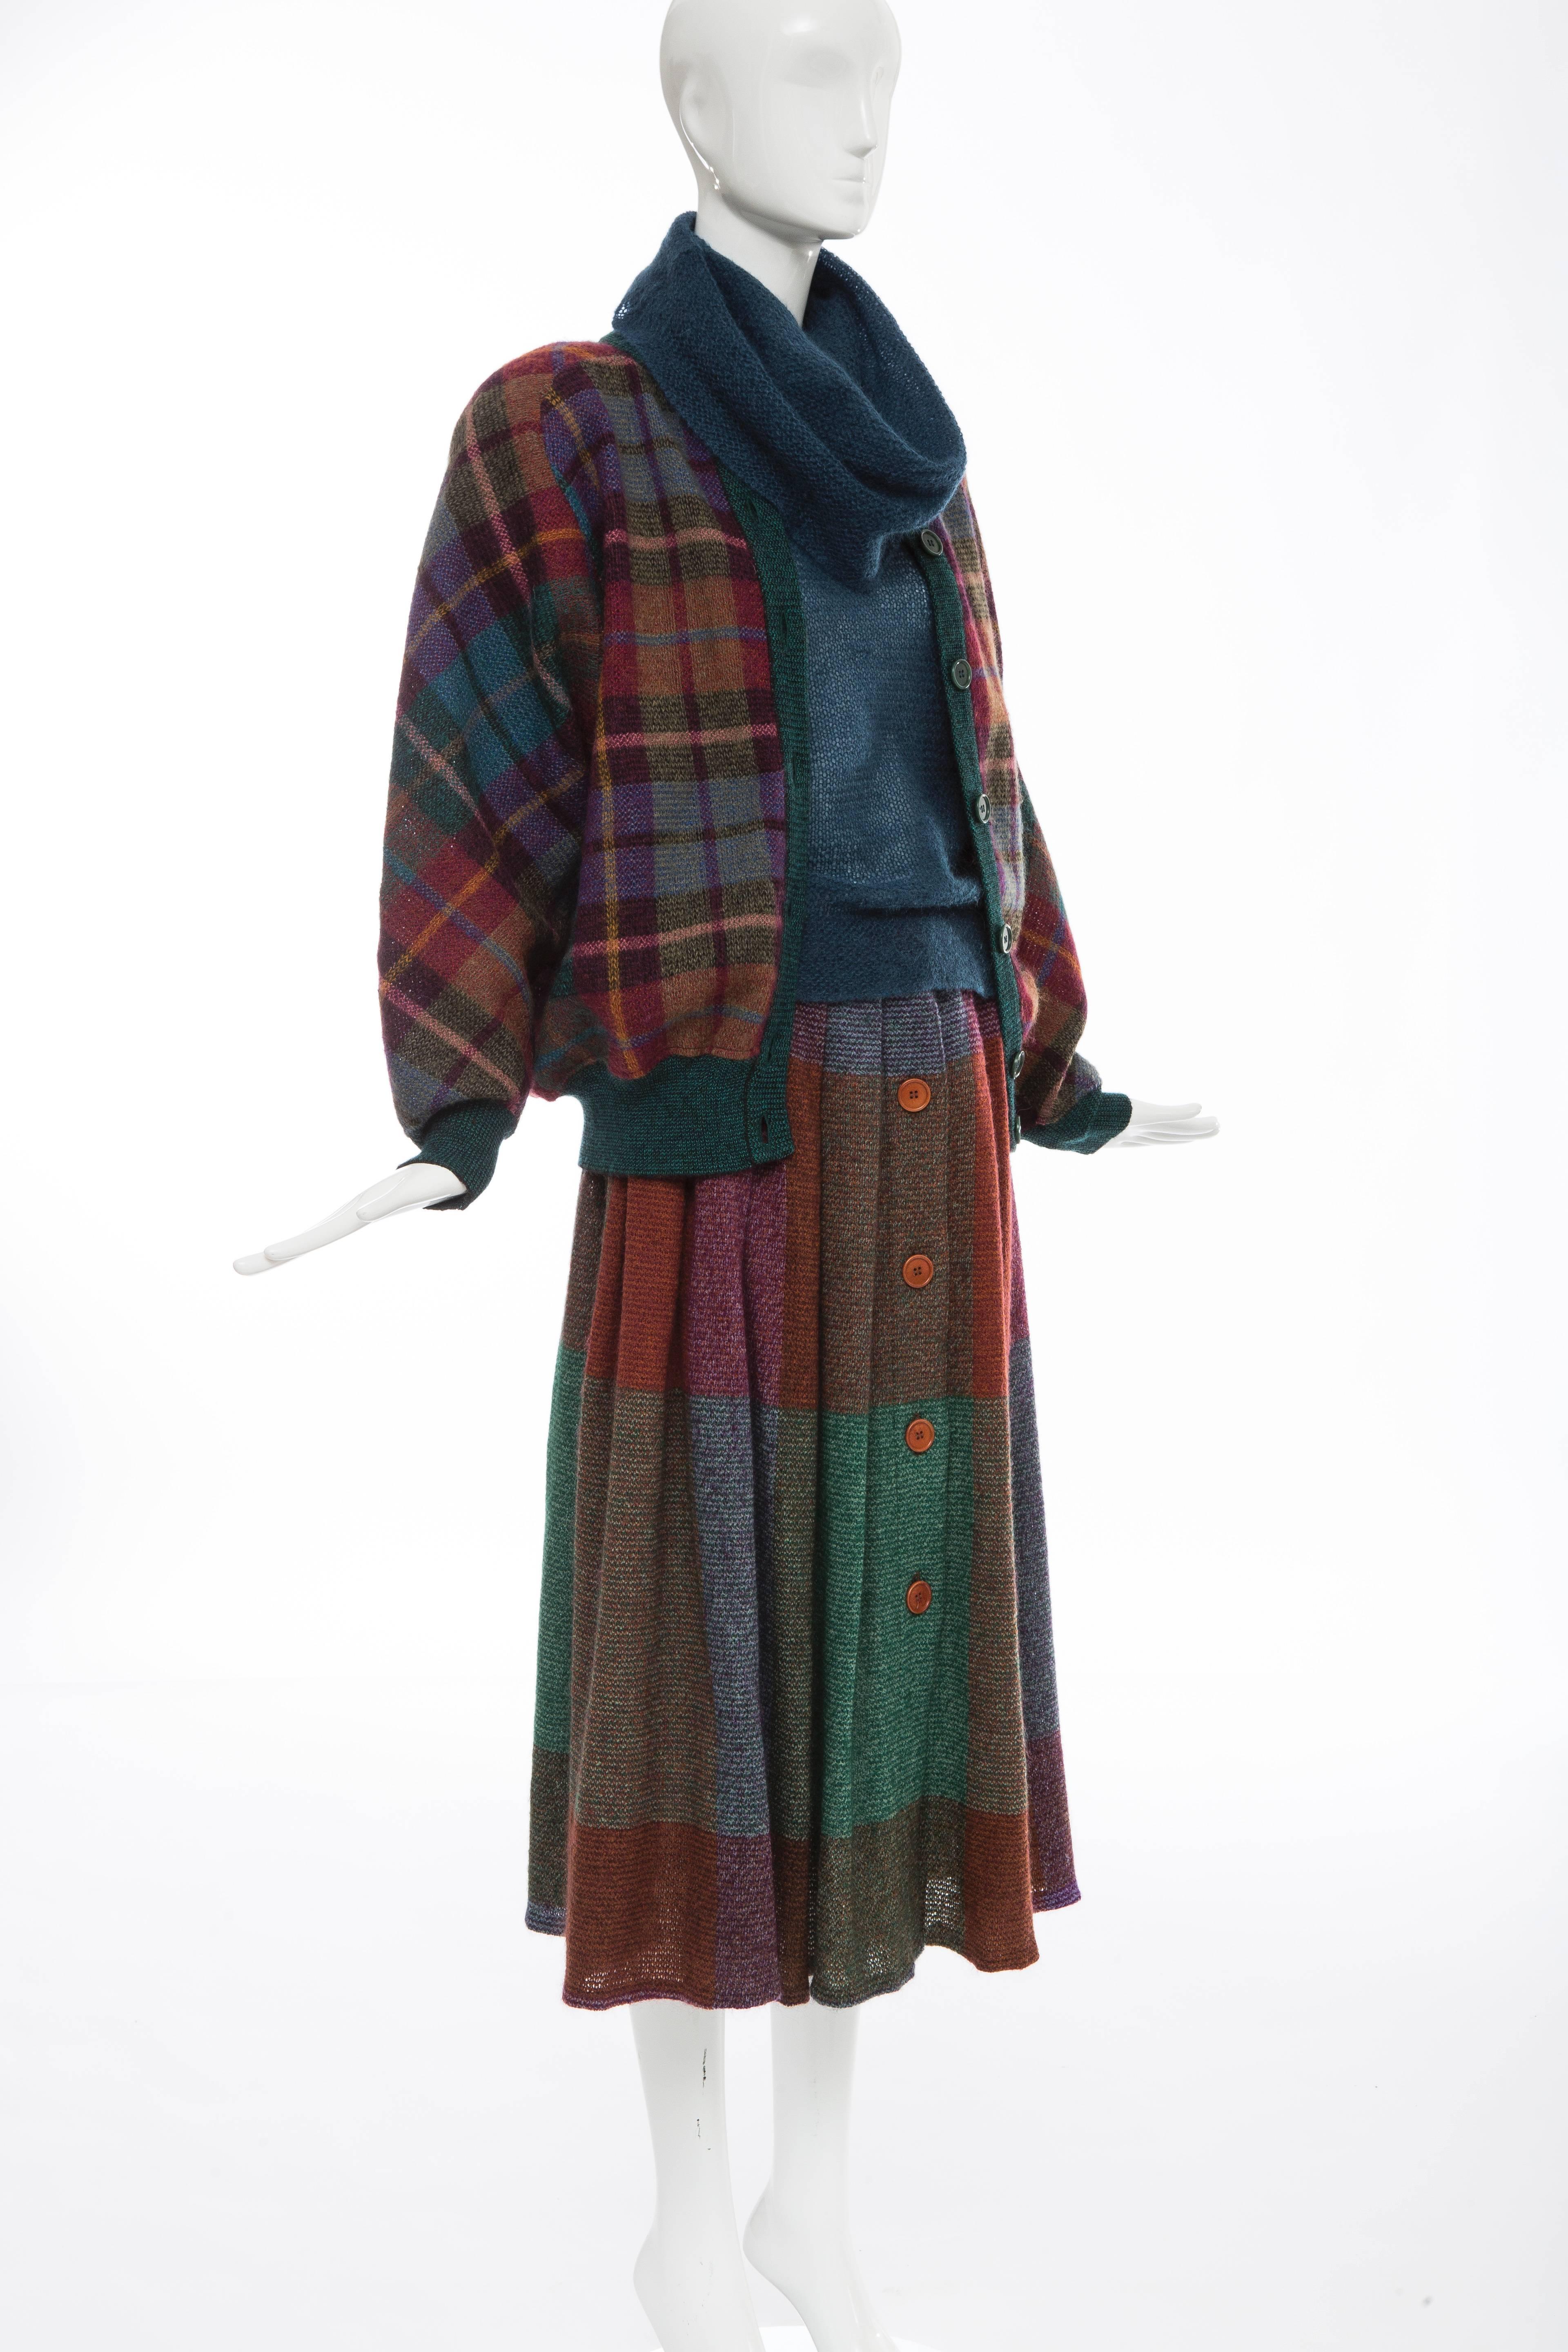 Women's Missoni Knit Plaid Tweed Mohair Skirt Suit, Circa 1980's